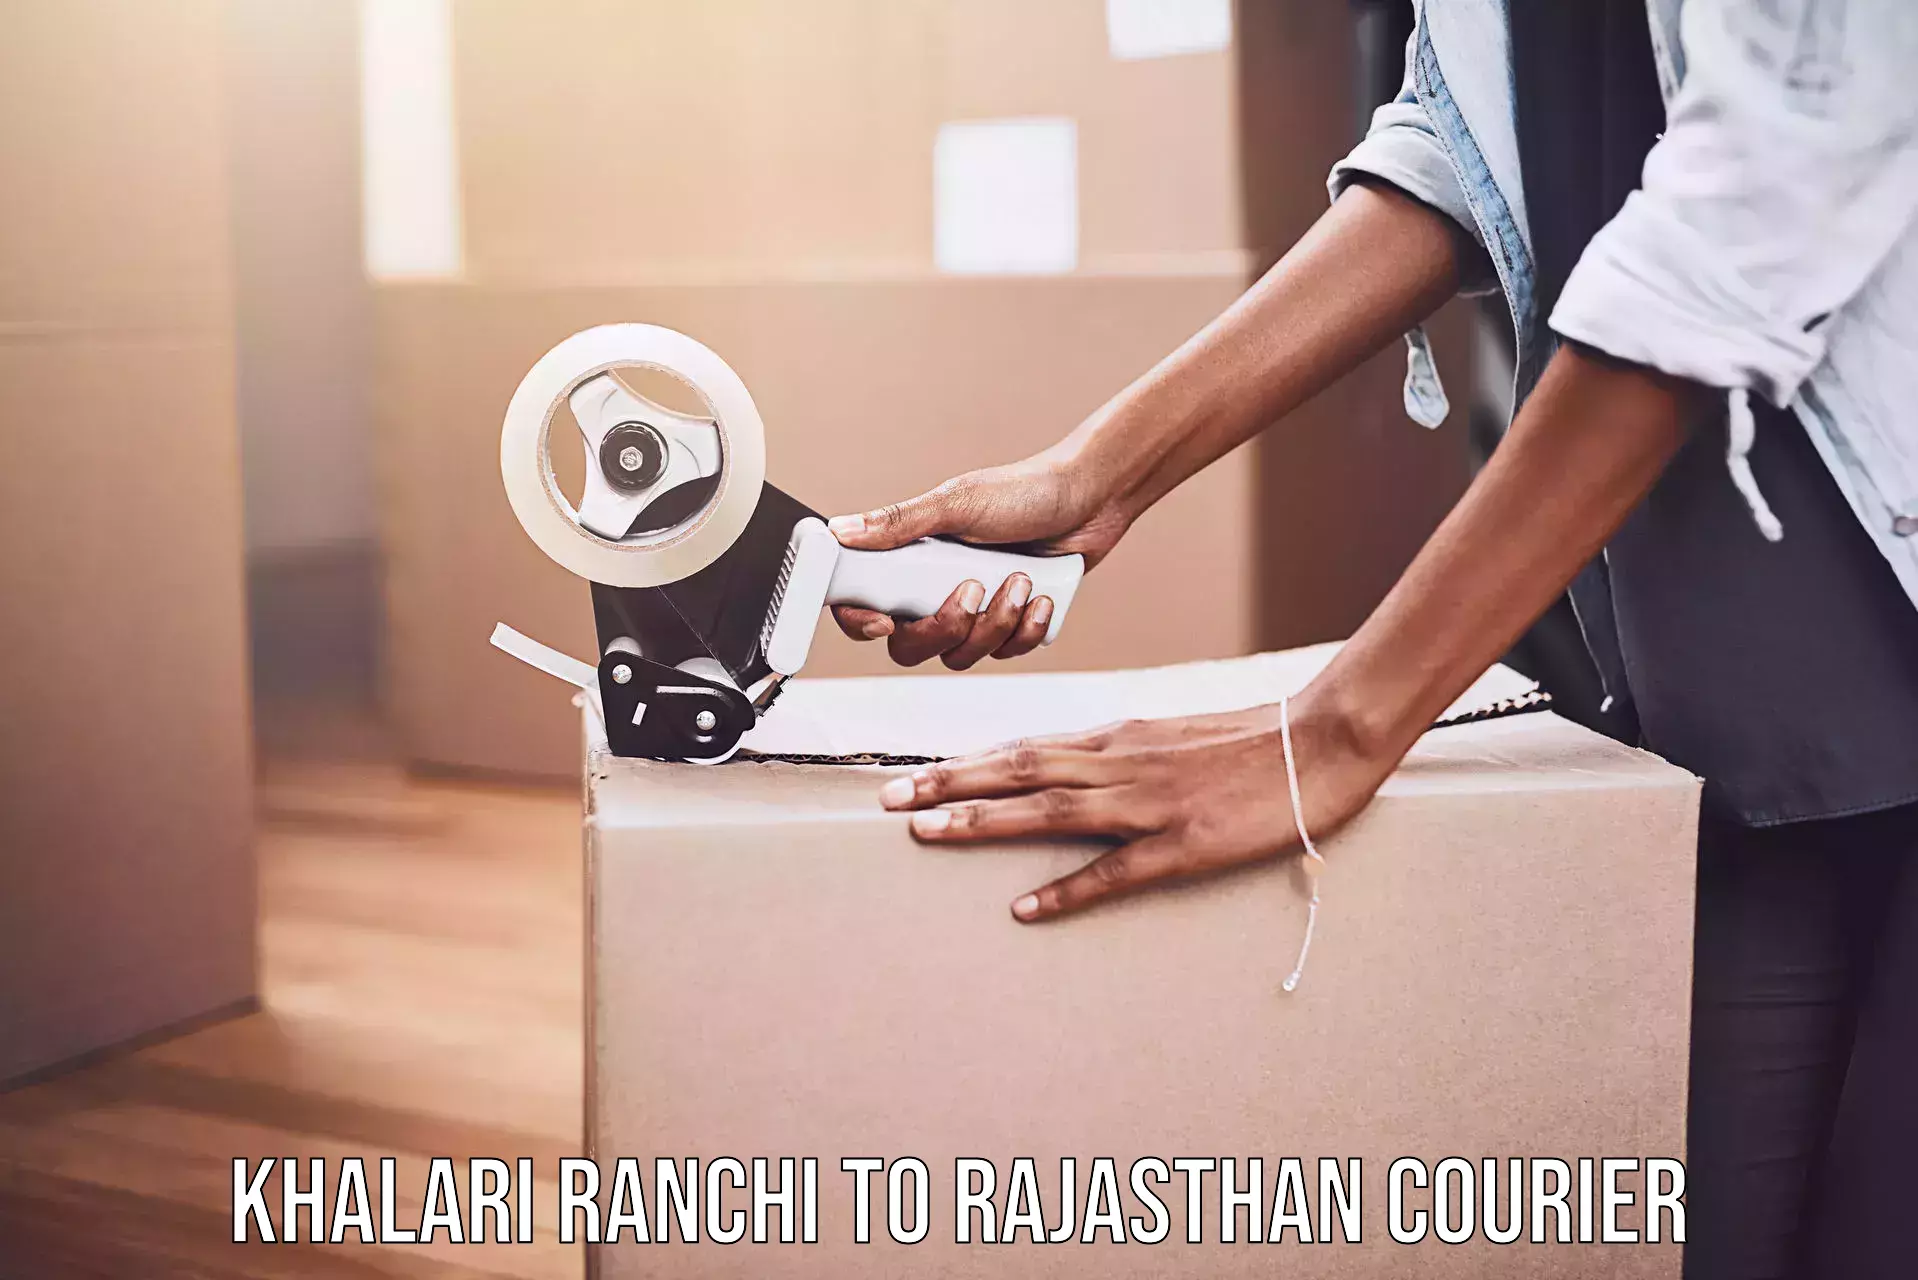 24-hour courier service Khalari Ranchi to Bikaner